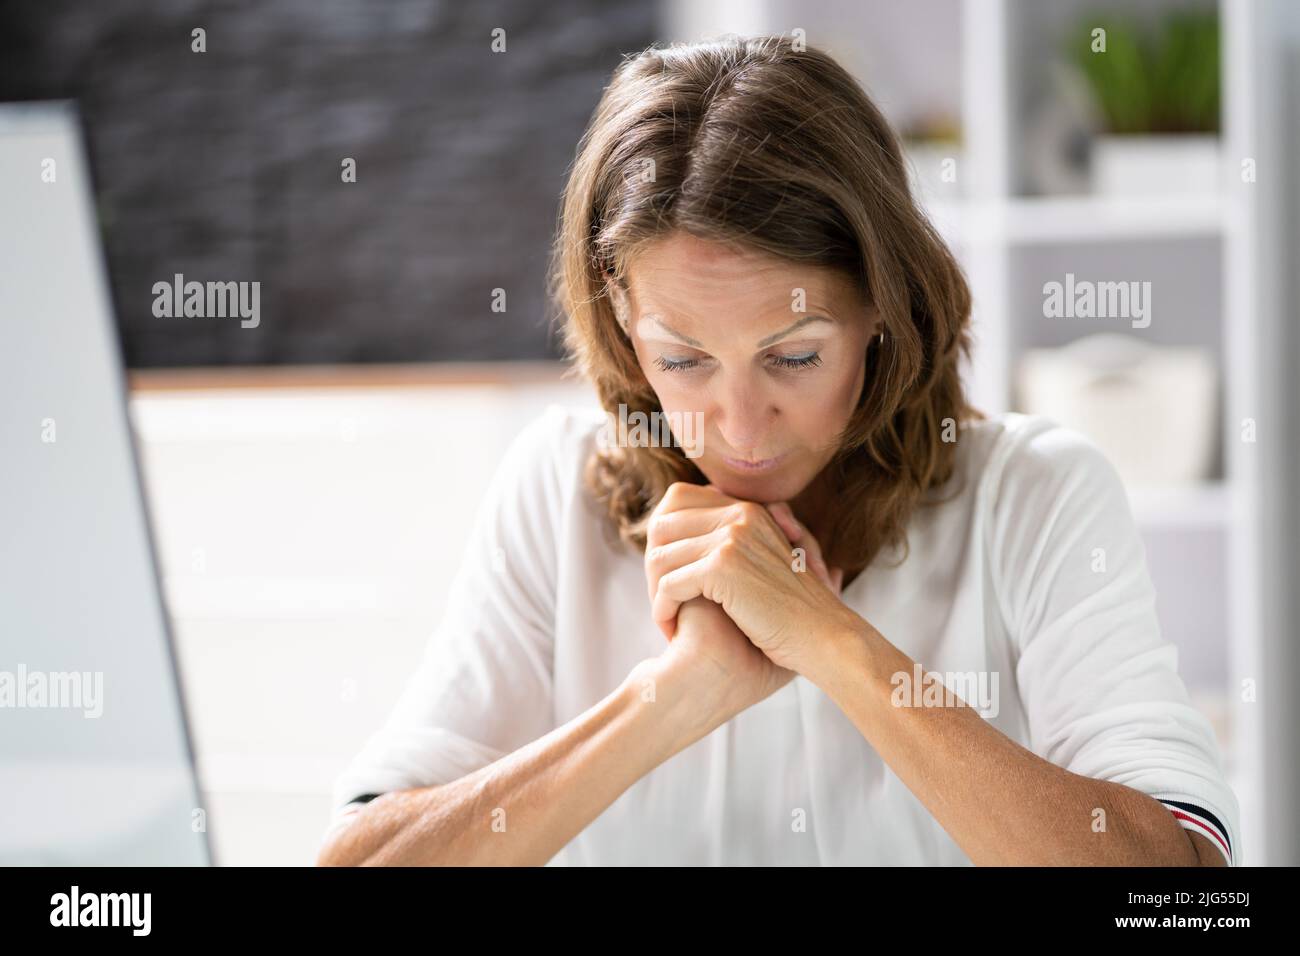 Praying Religious Woman. Christian Prayer Seeking God Stock Photo